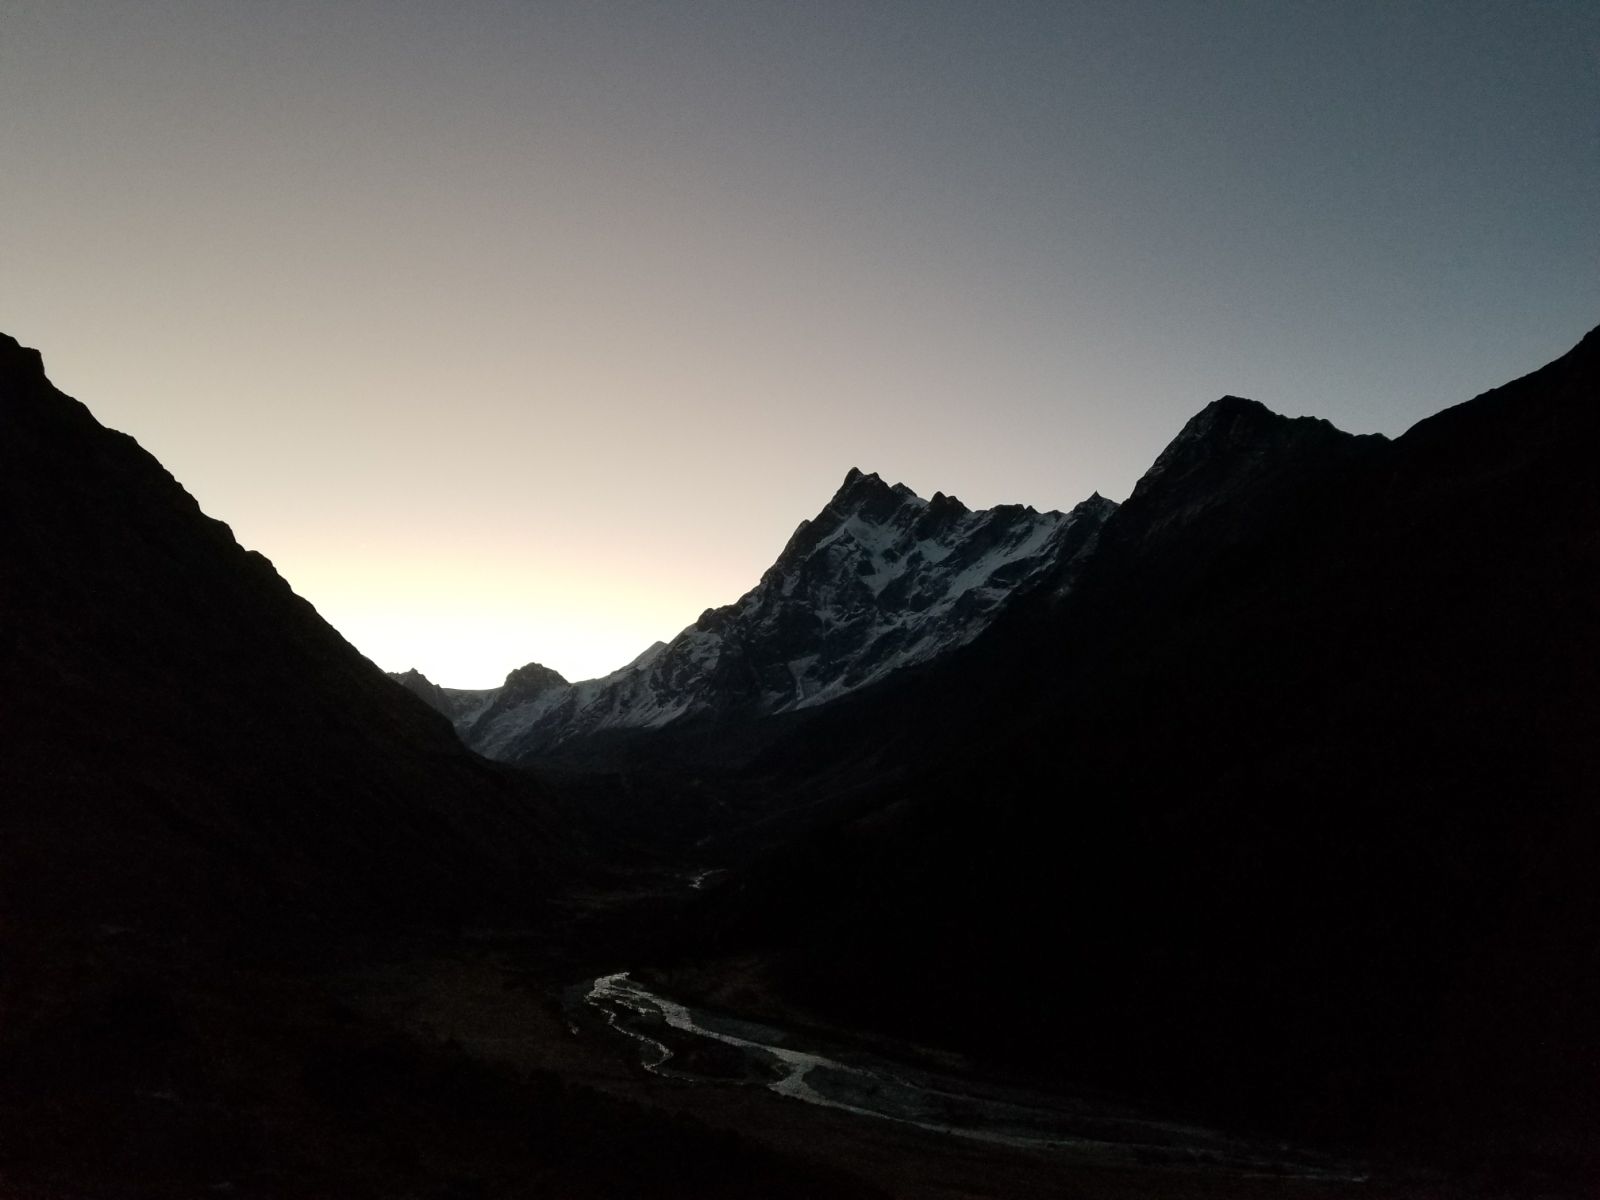 Dawn in Har Ki doon Valley - Himalayan Institute